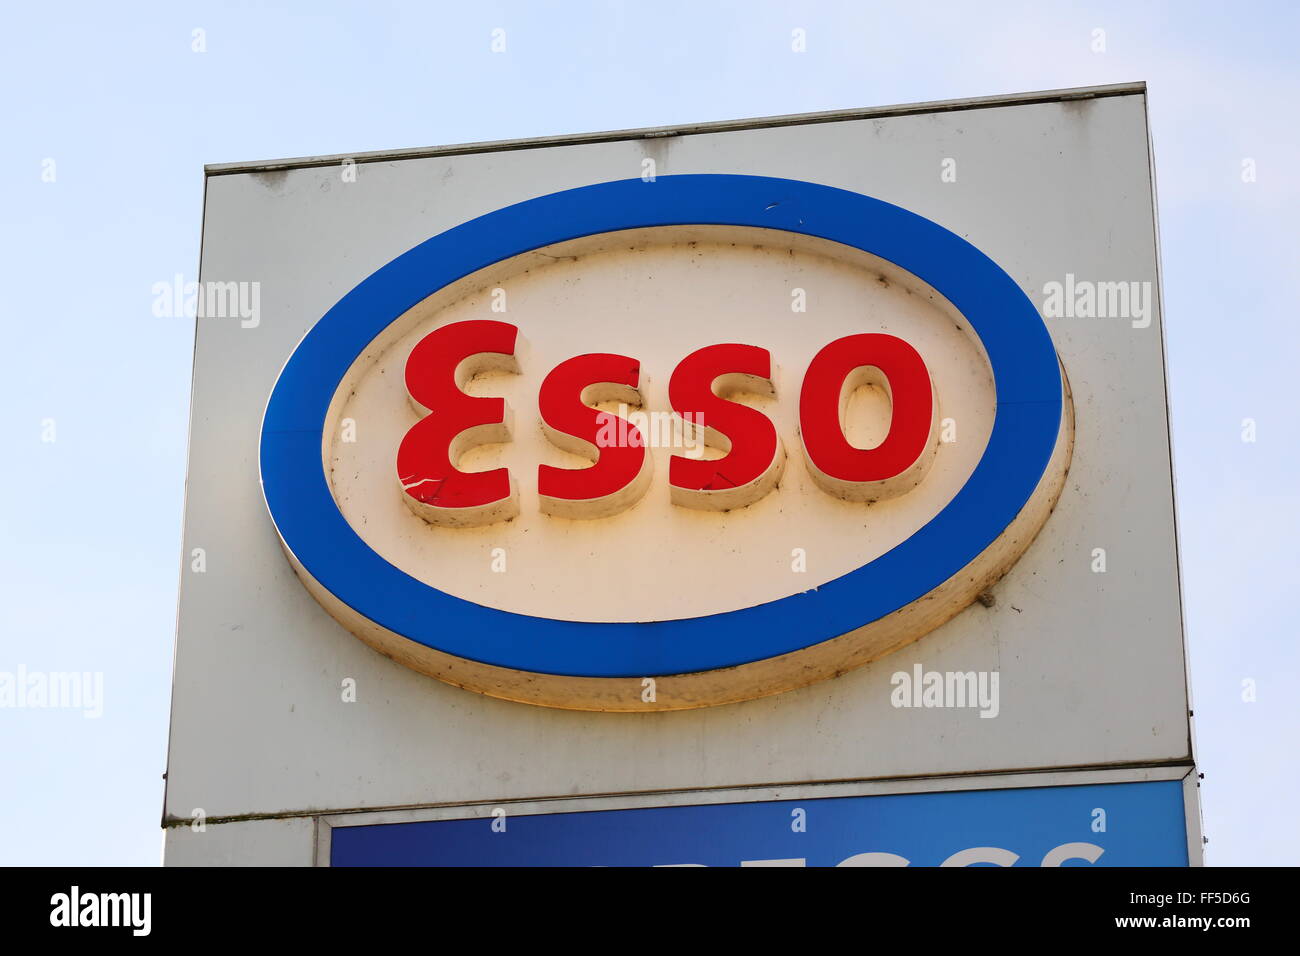 Esso sign at a petrol statio near Heathrow Airport, UK Stock Photo